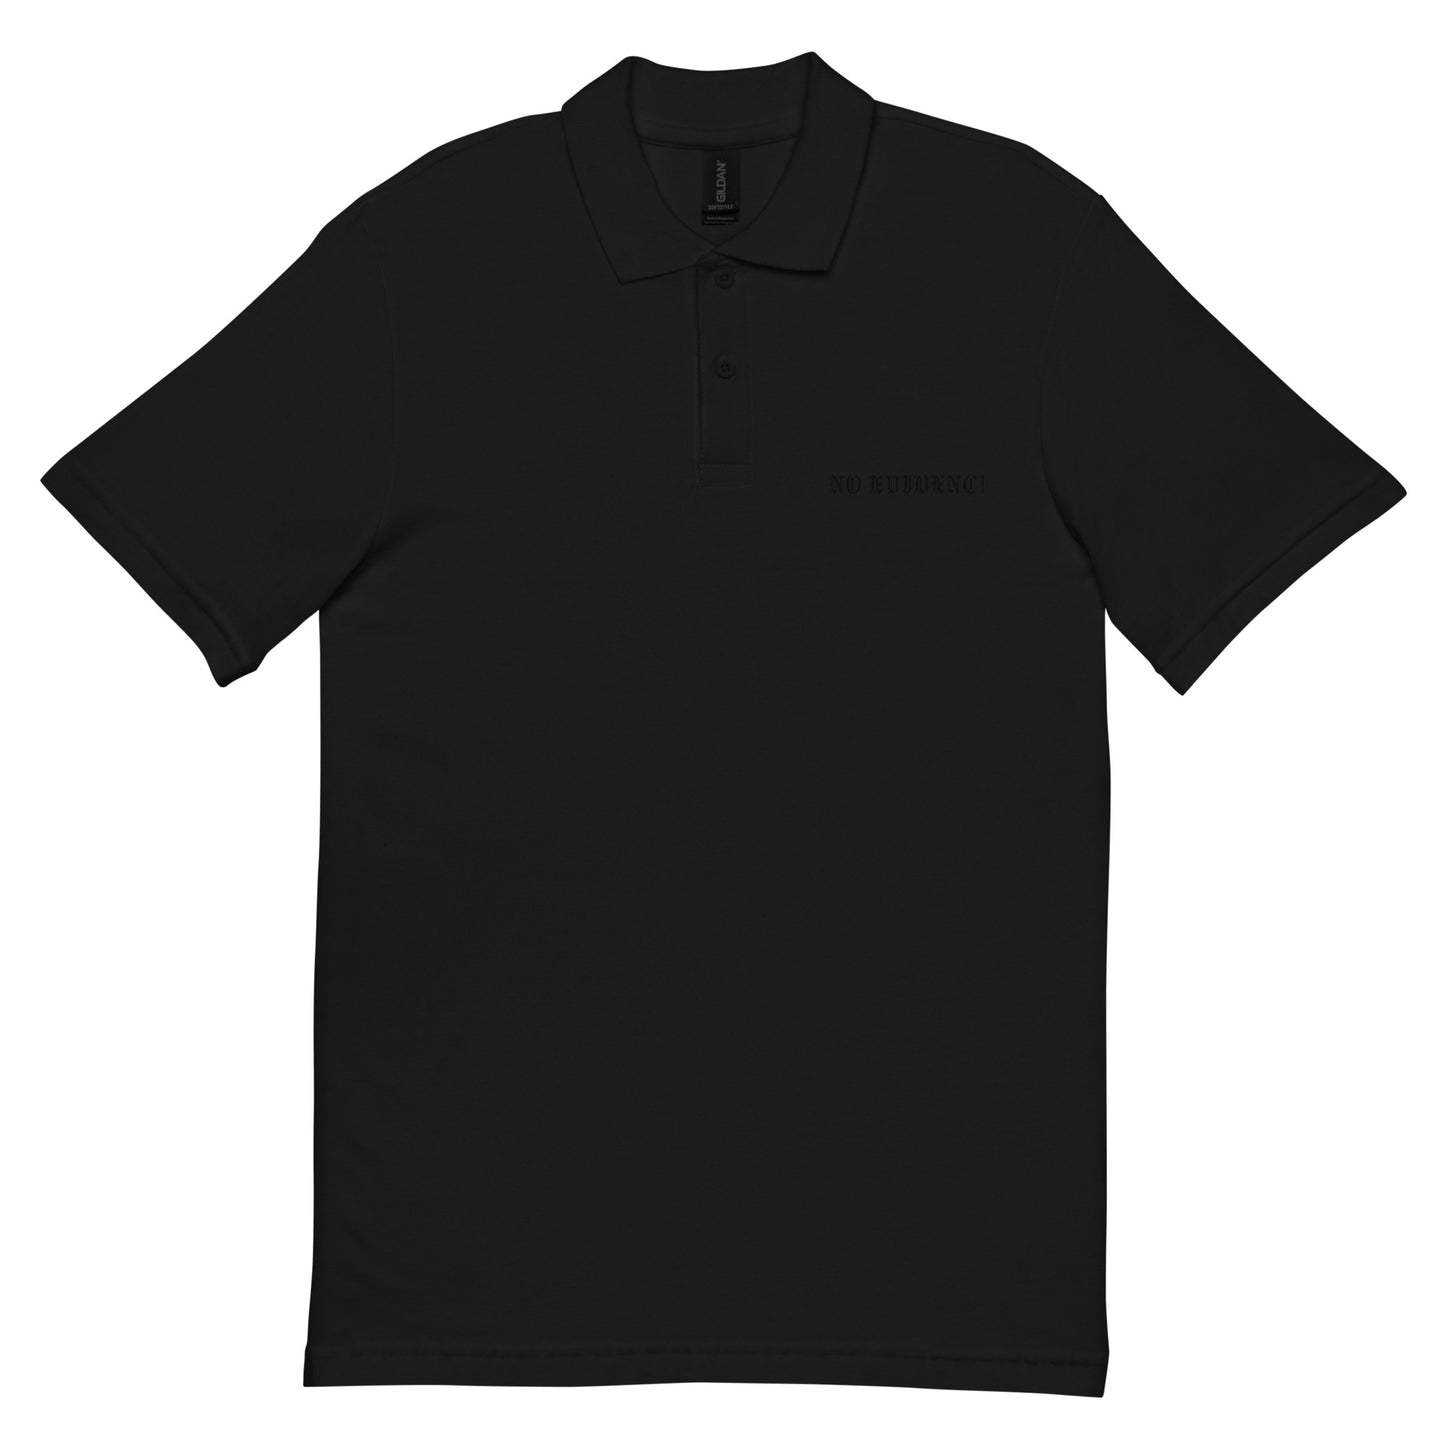 Unisex NE Classic polo shirt "Black edition"